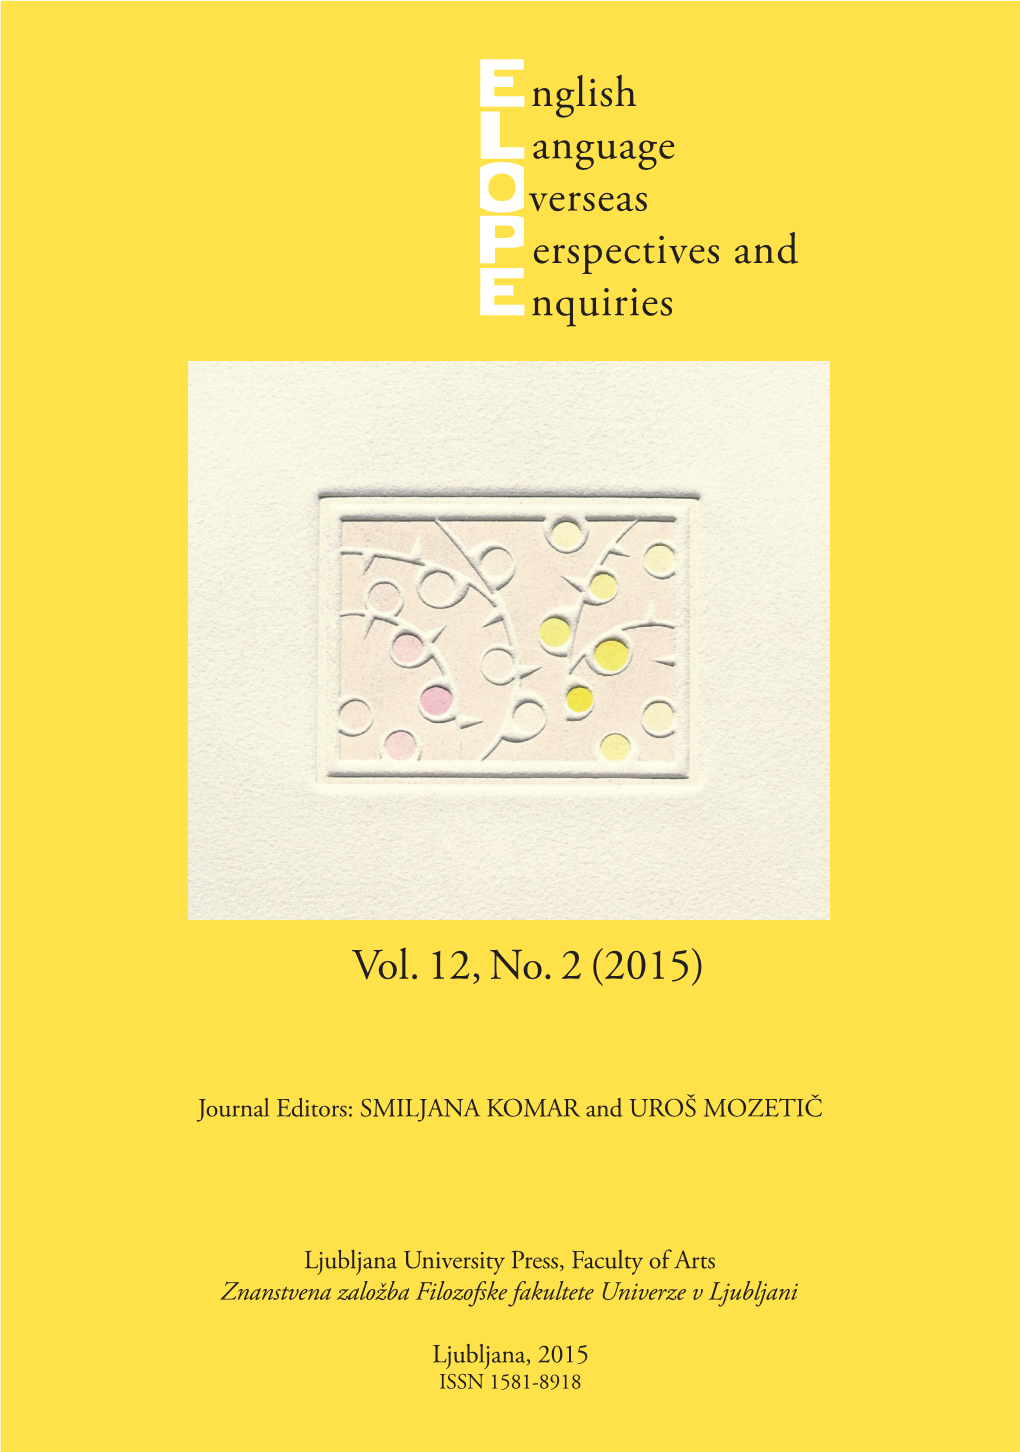 Nglish Anguage Verseas Erspectives and Nquiries Vol. 12, No. 2 (2015)